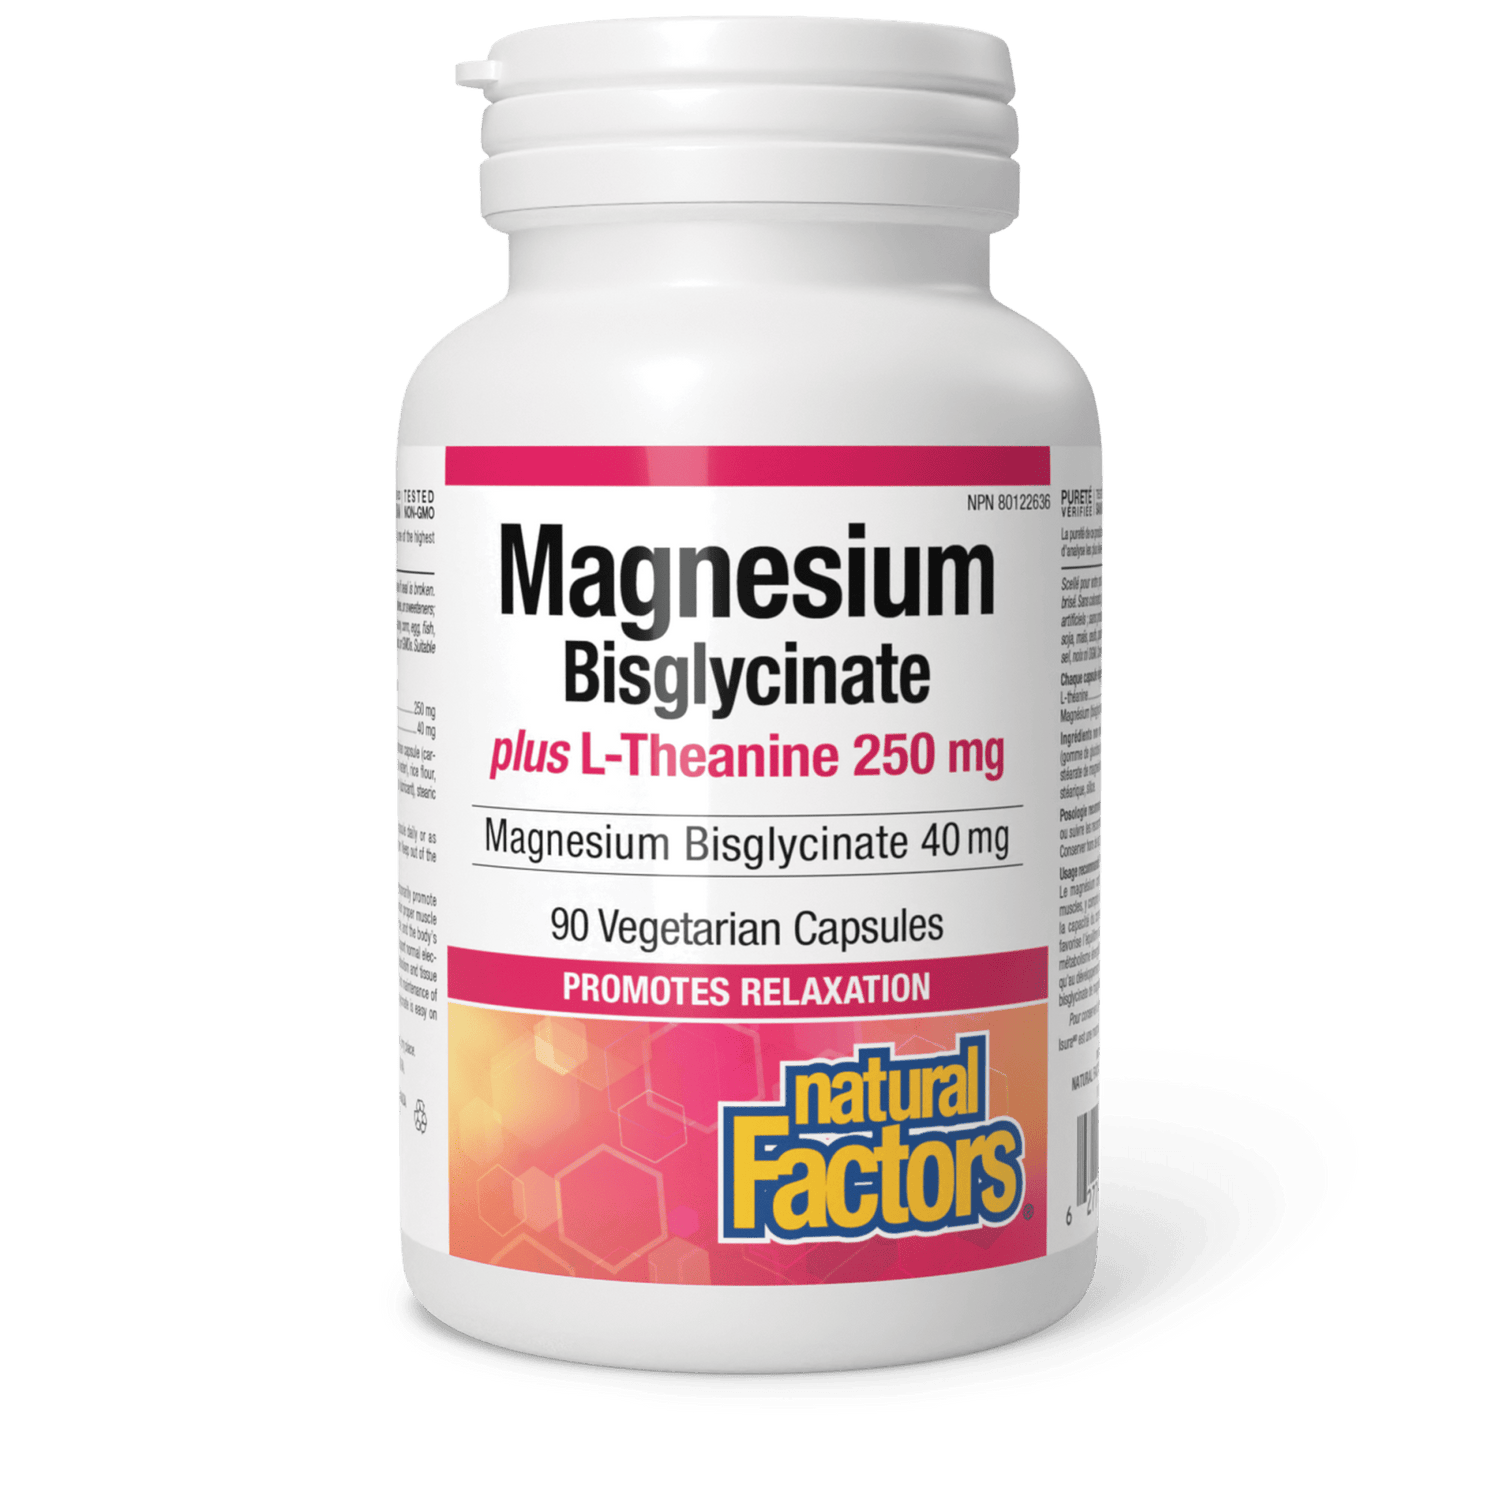 Magnesium Bisglycinate plus L-Theanine 250 mg, Natural Factors|v|image|2868